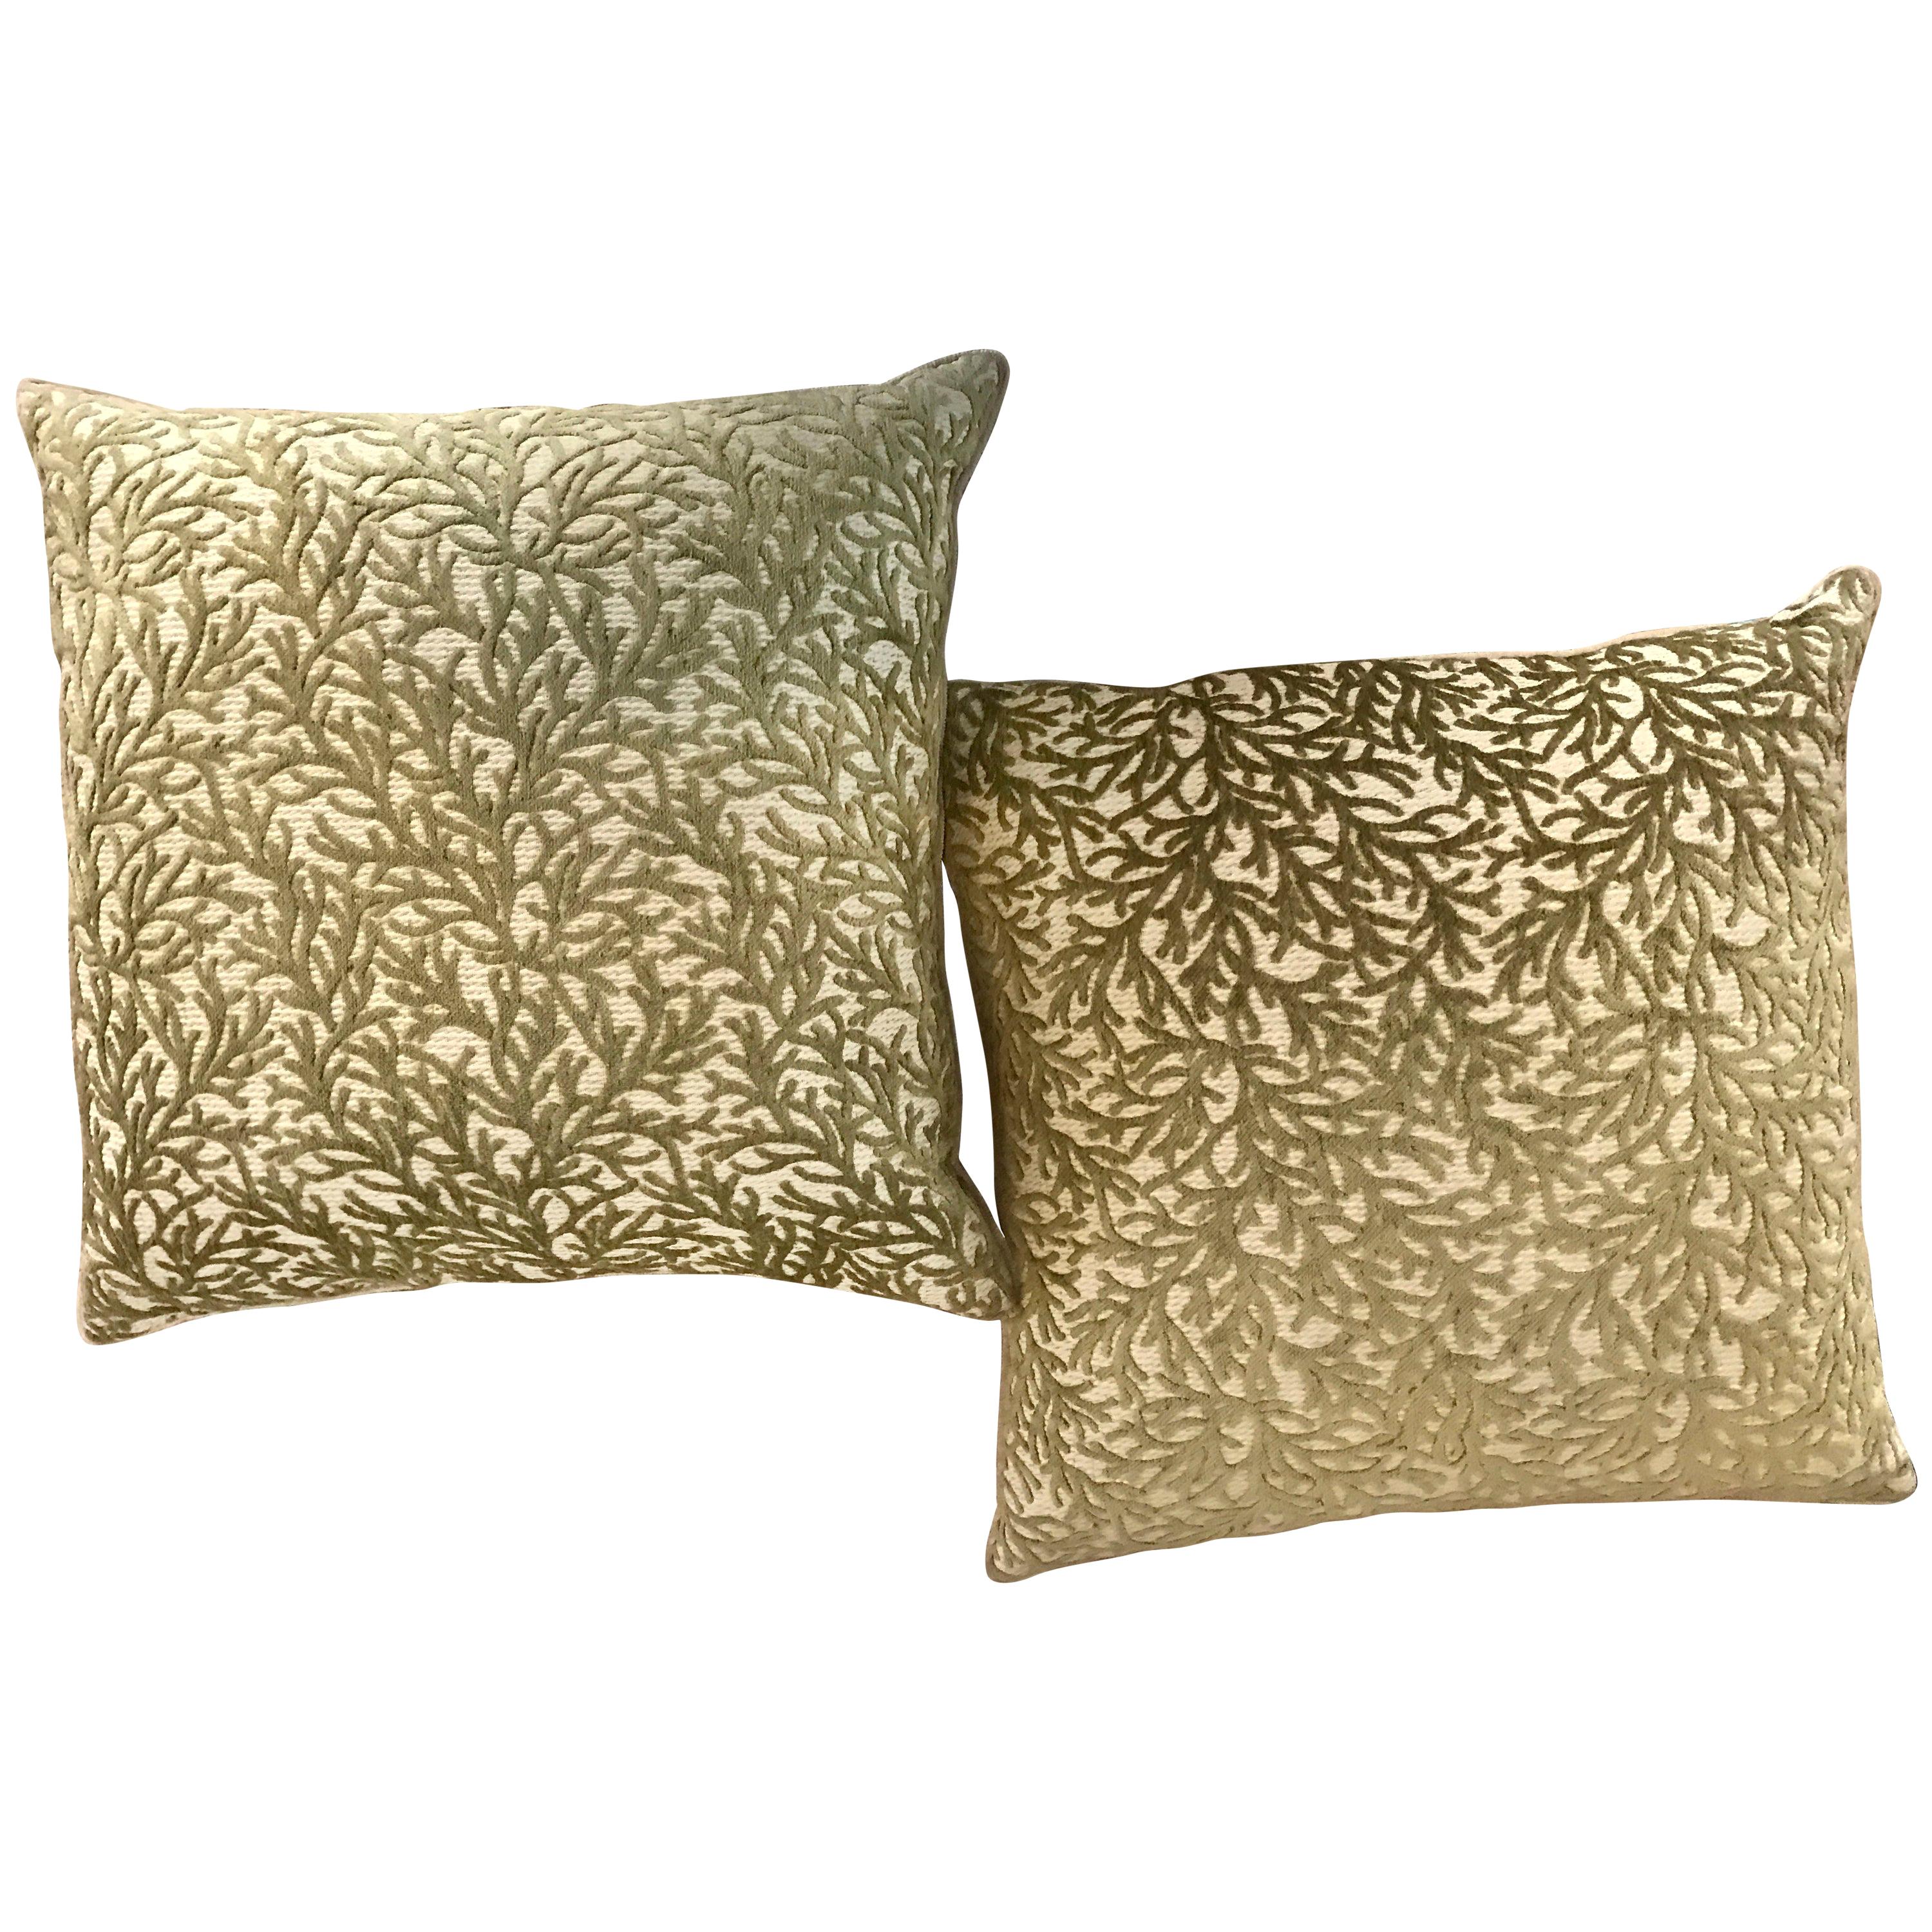  Pair of Sage Coral Cut Velvet Modern Design Throw Pillows